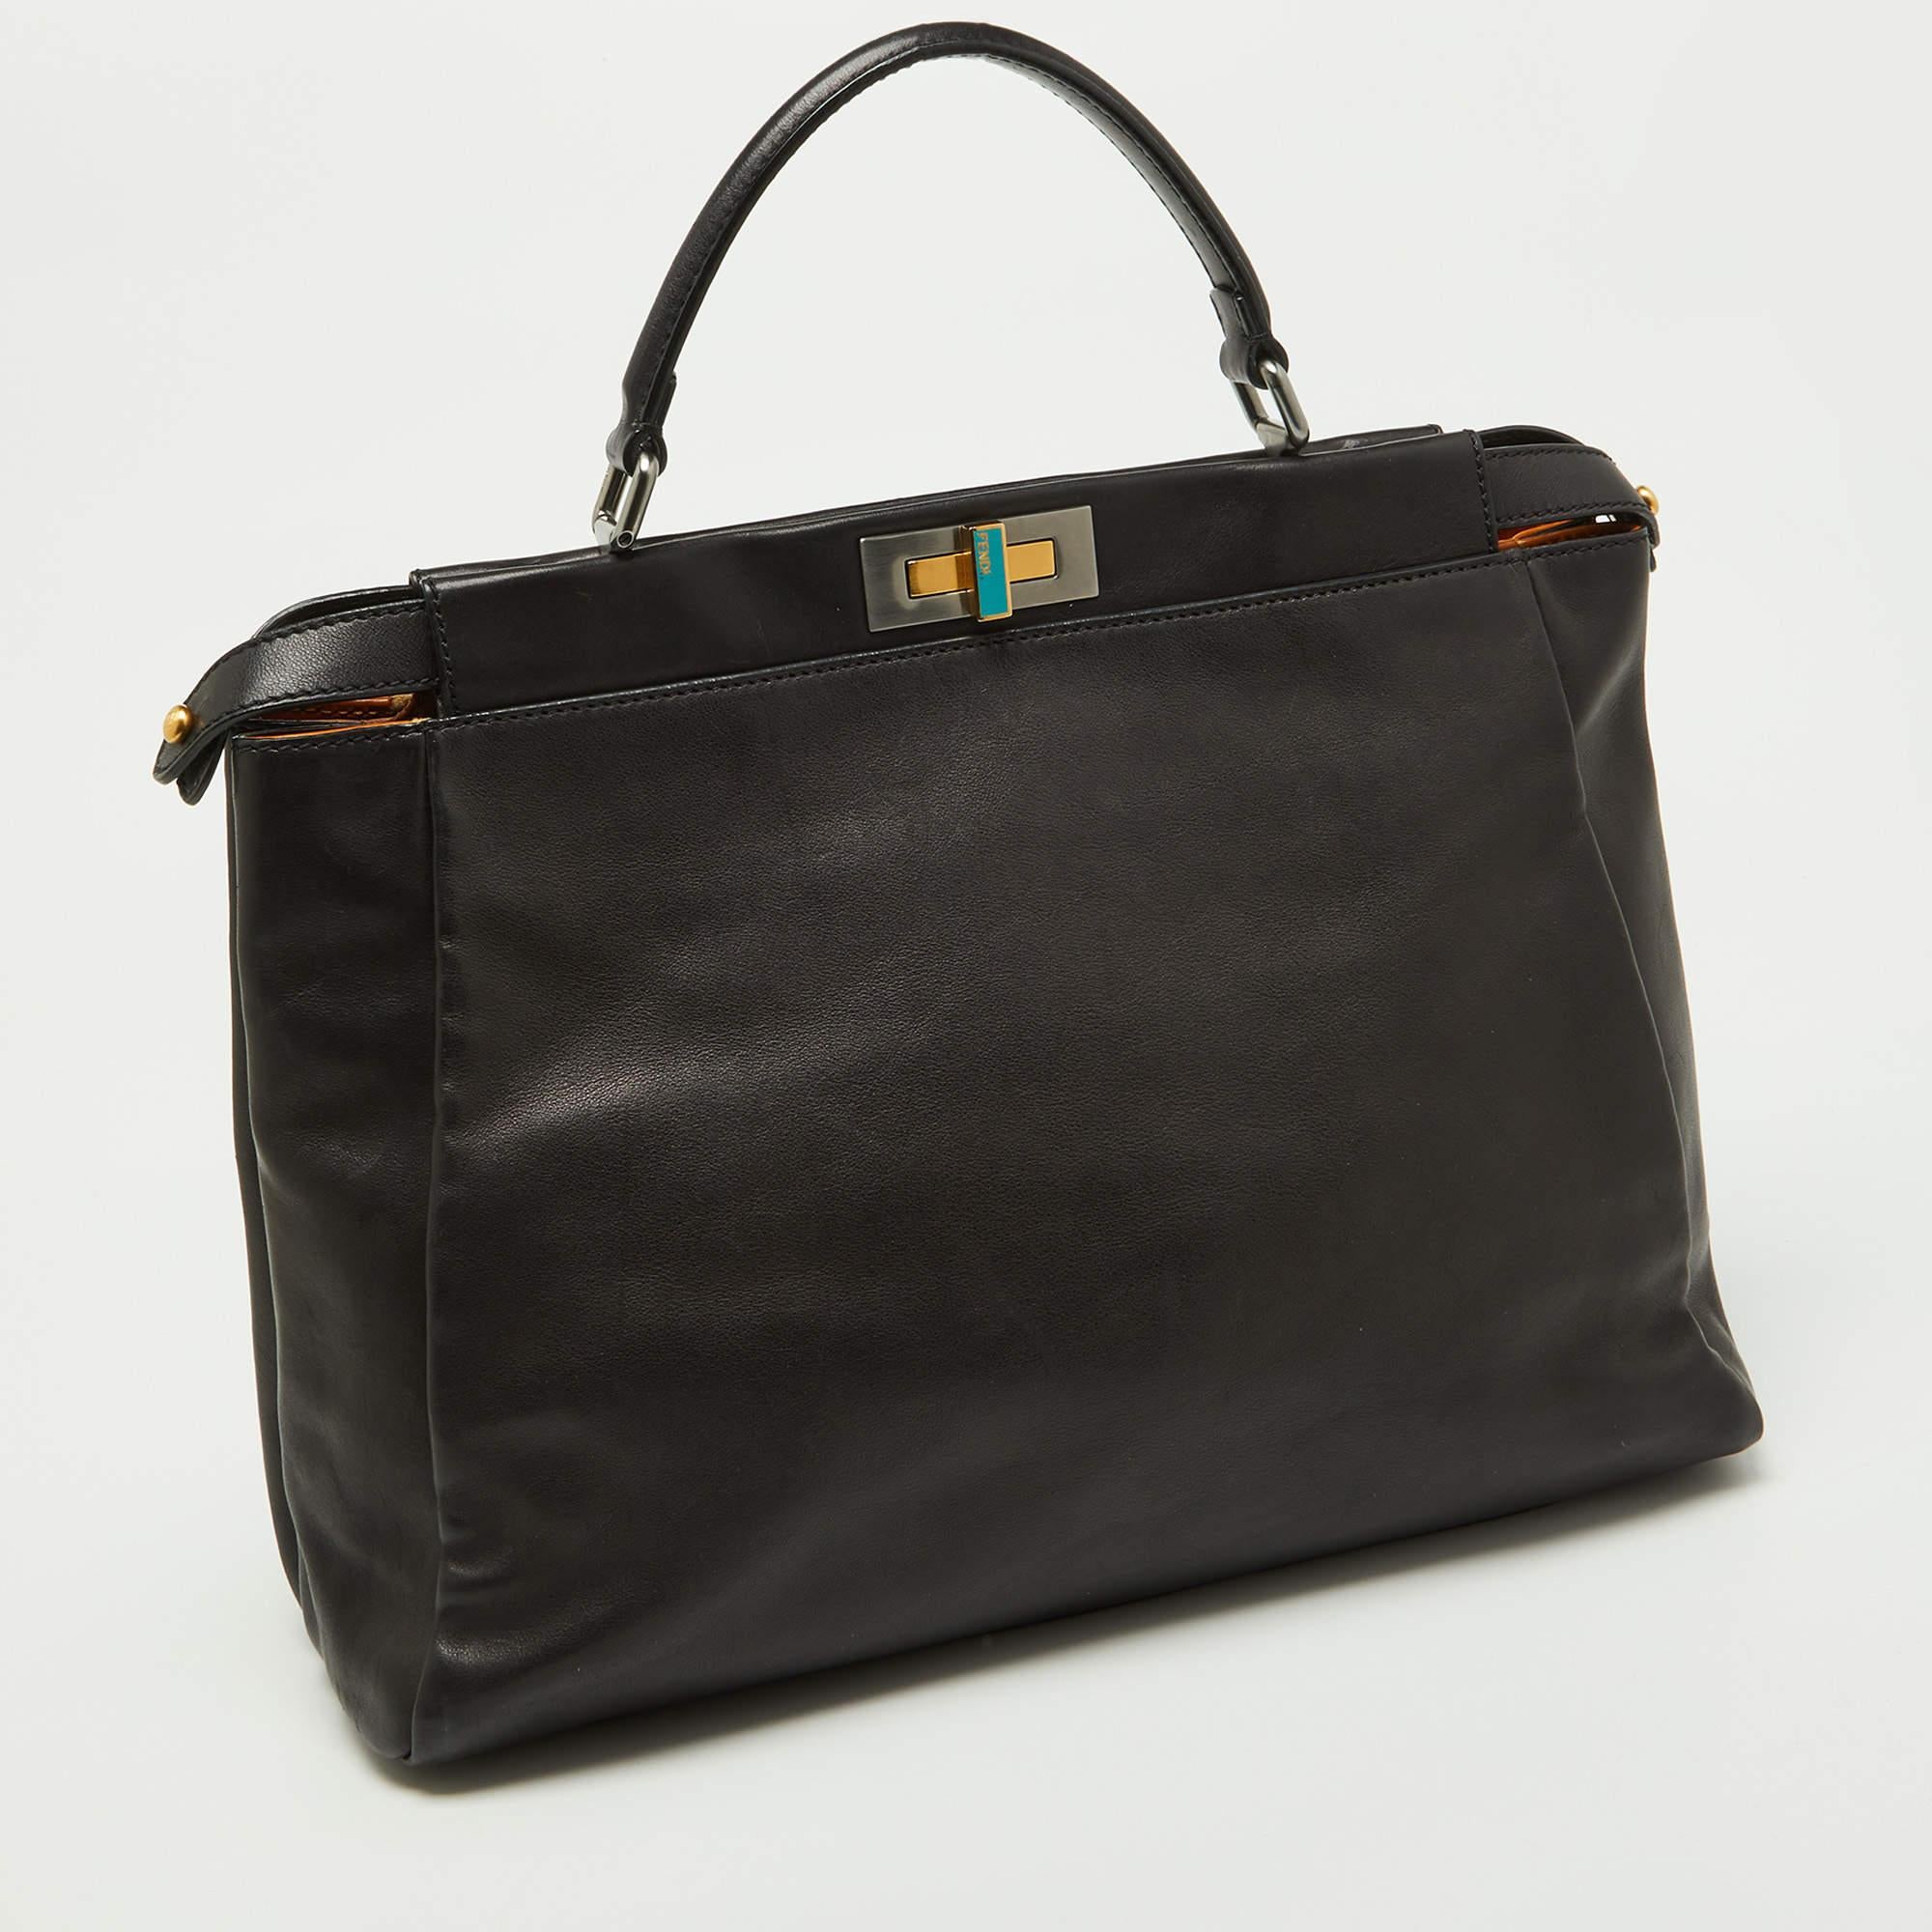 Women's Fendi Black Leather Large Peekaboo Top Handle Bag